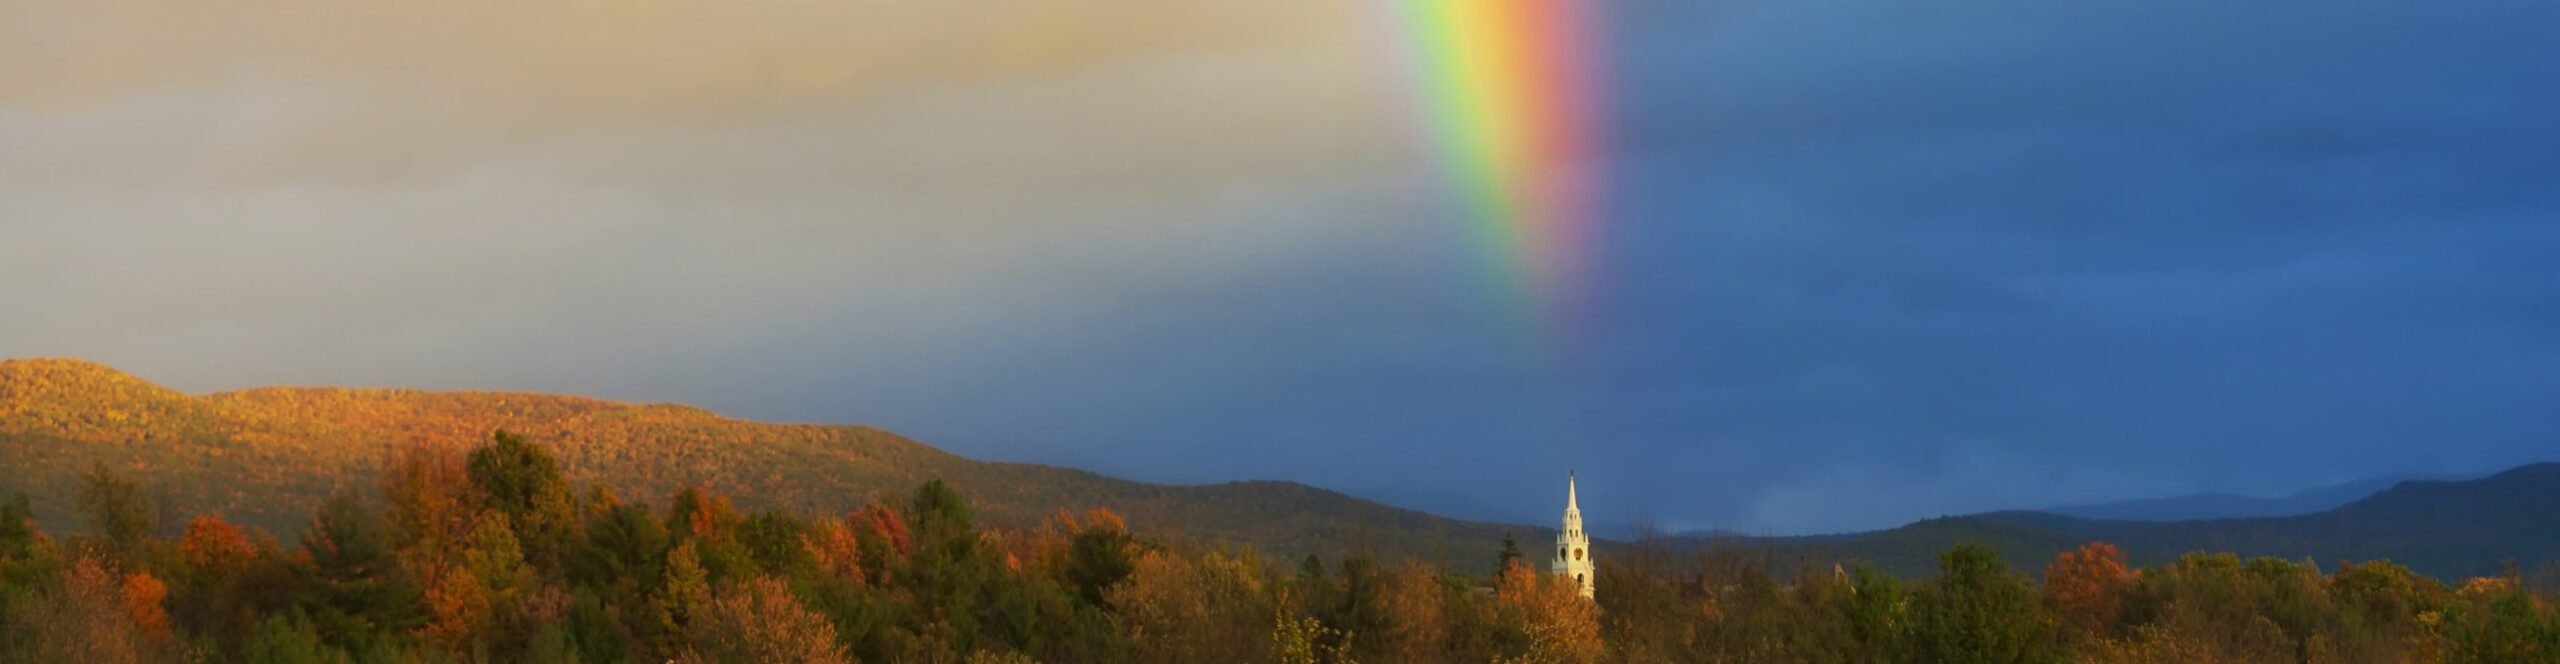 Middlebury Rainbow over Church 1 scaled